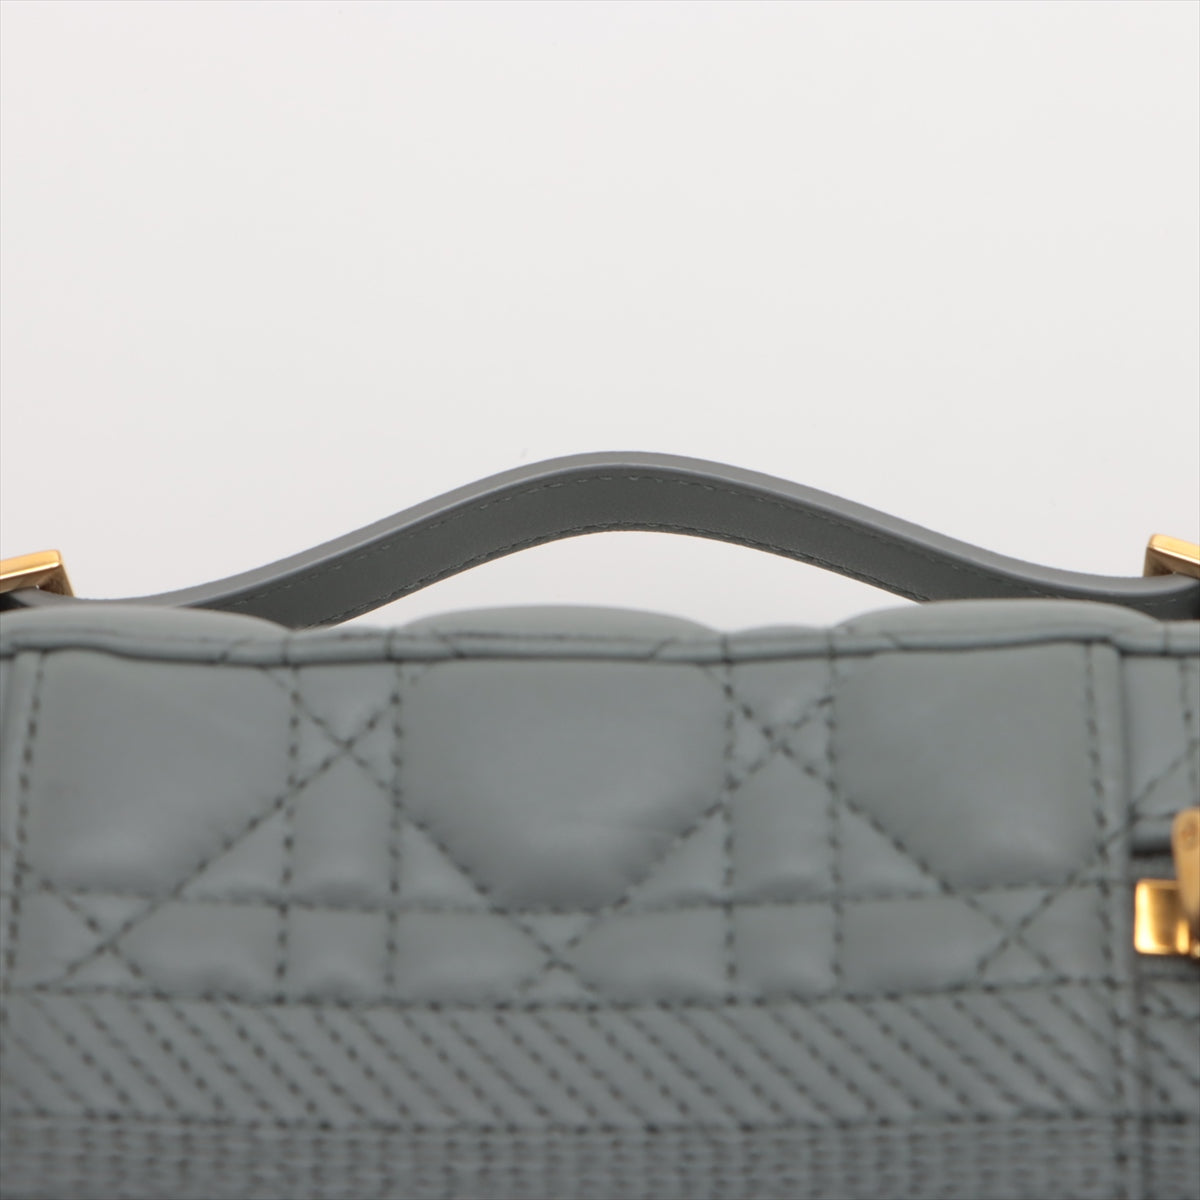 Christian Dior Lady Leather 2WAY Vanity Bag Gr Earl